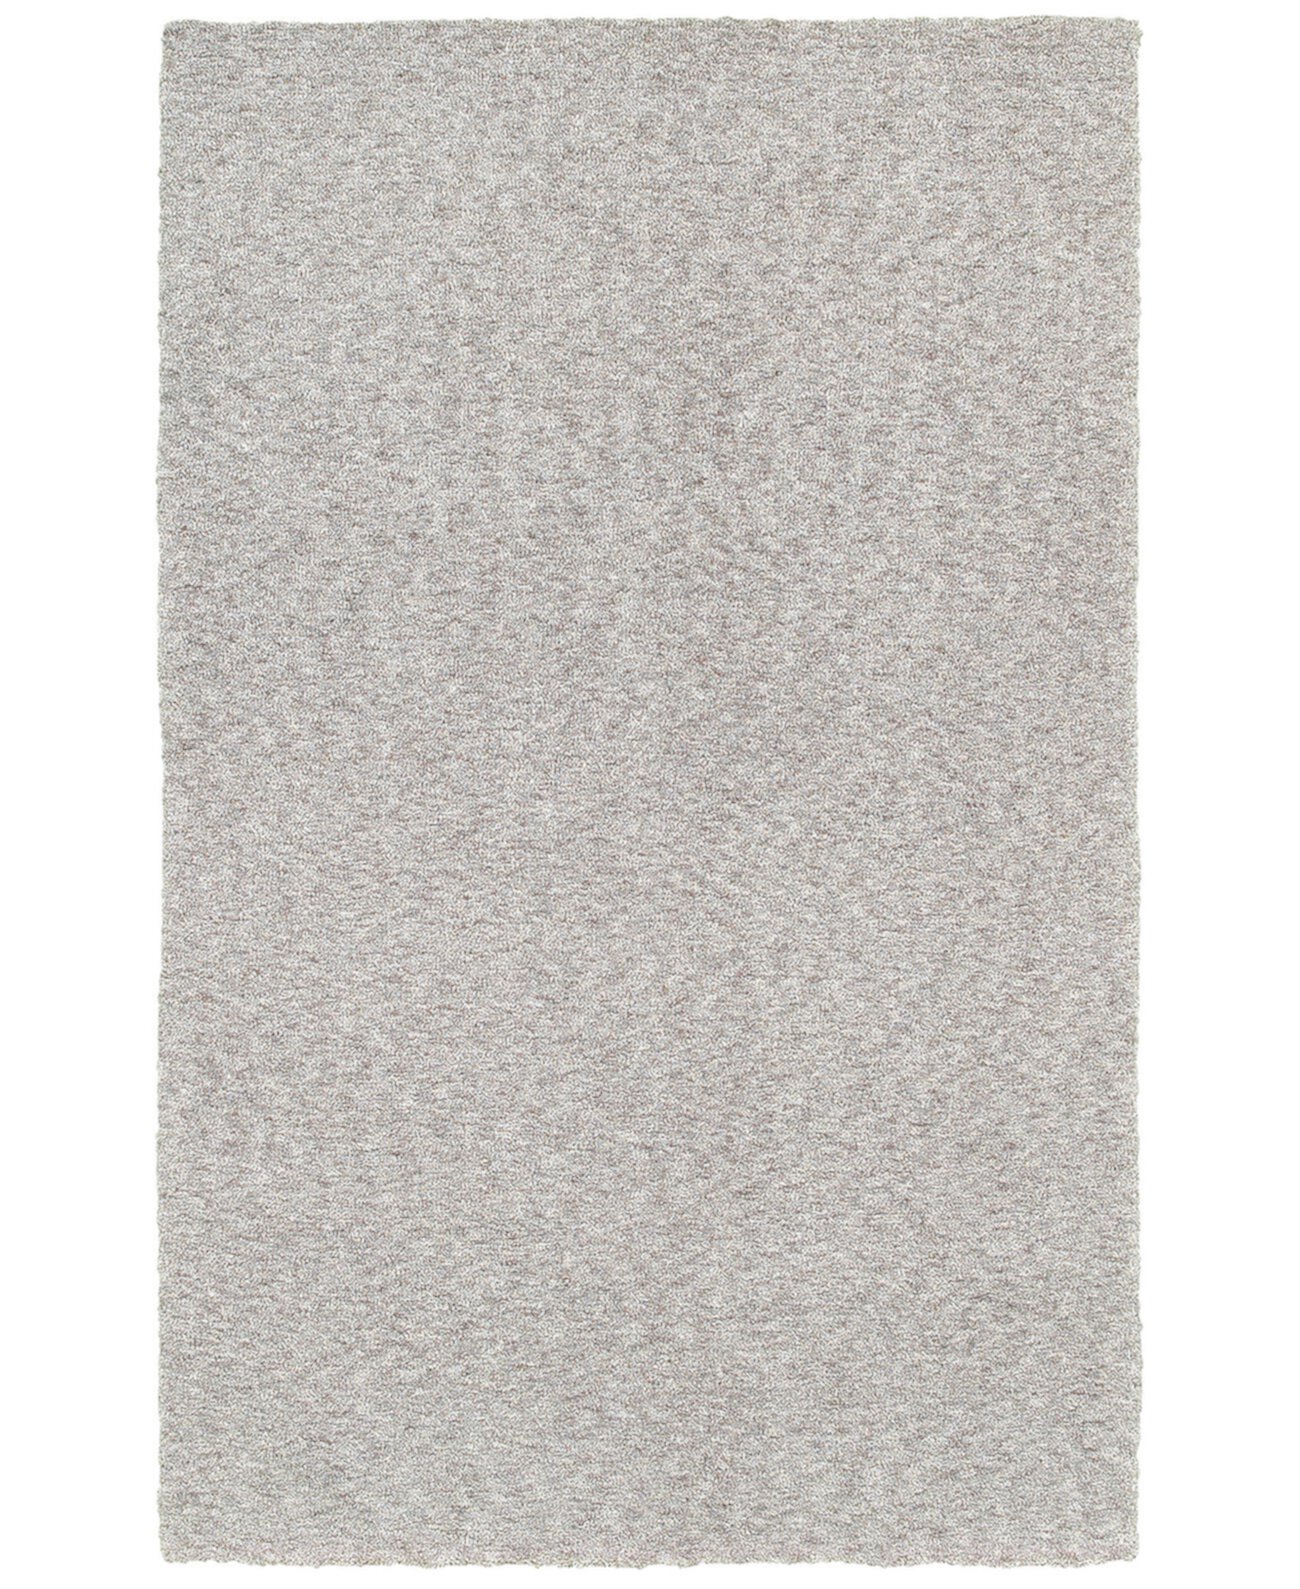 Heavenly Shag 73407 Серый/Серый коврик размером 3 x 5 футов Oriental Weavers